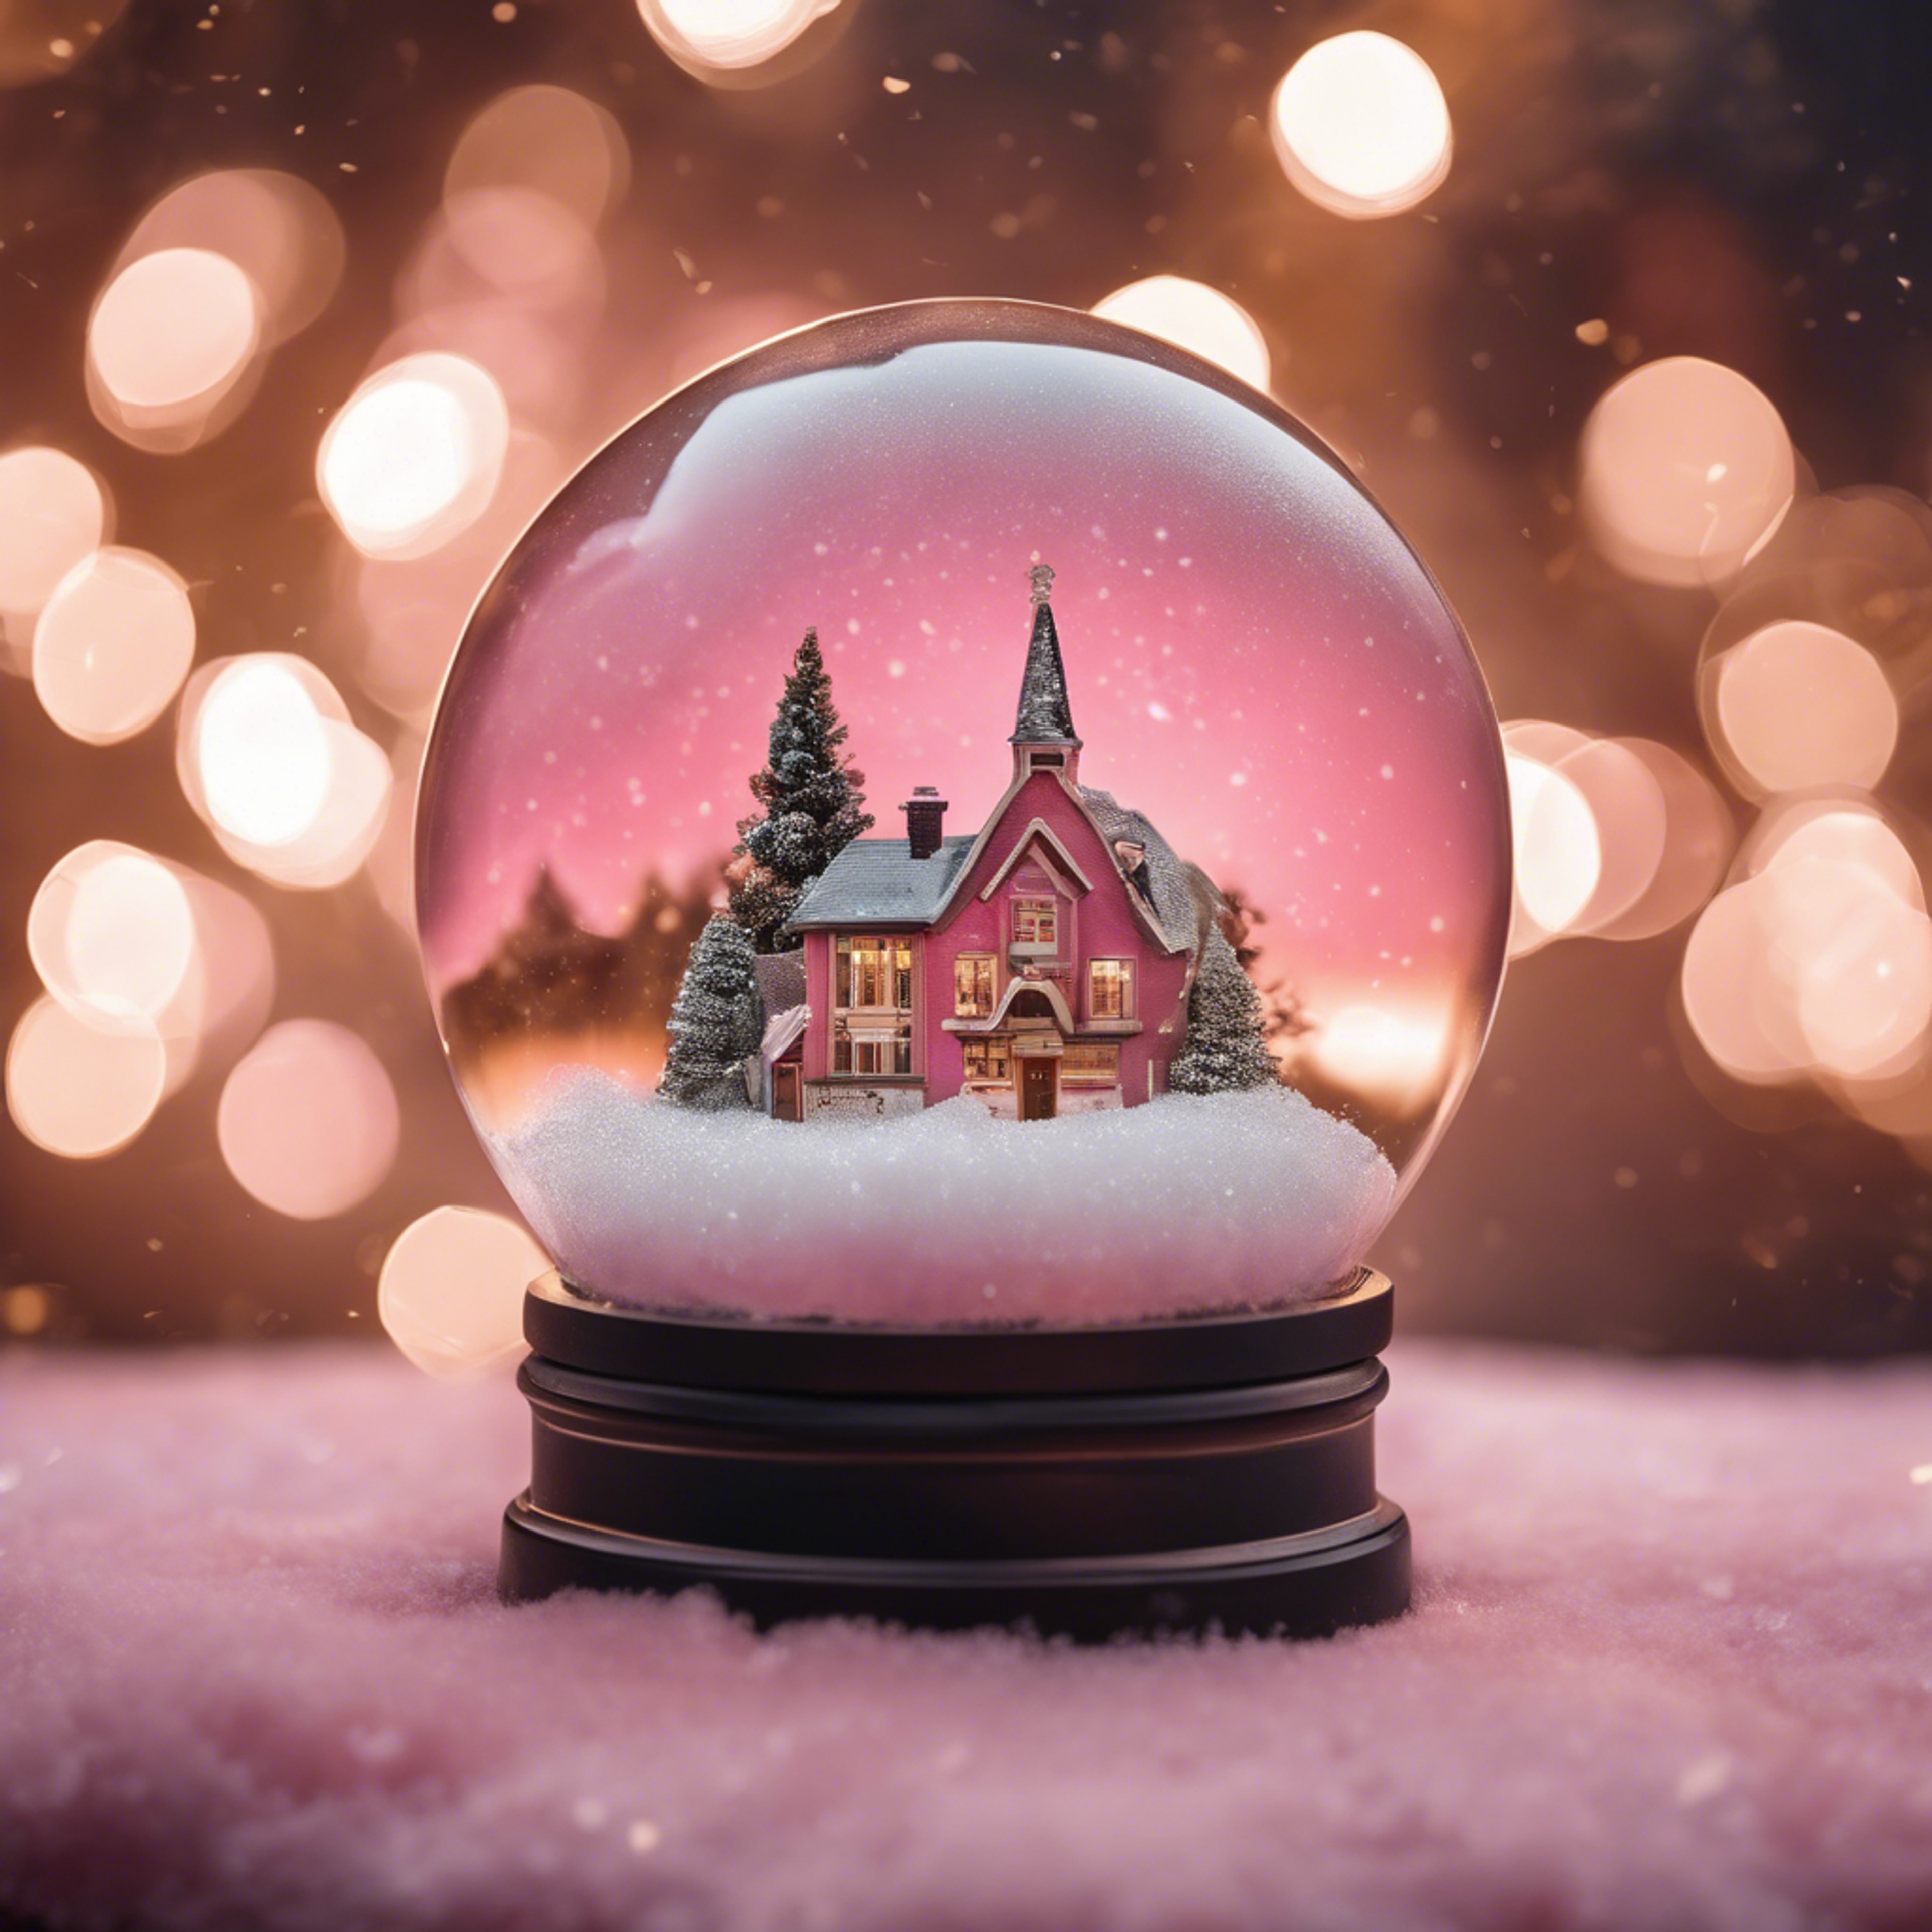 An enchanting snow globe revealing a quaint town under a pink Christmas sky. Тапет[a24ac541fe61415897f7]